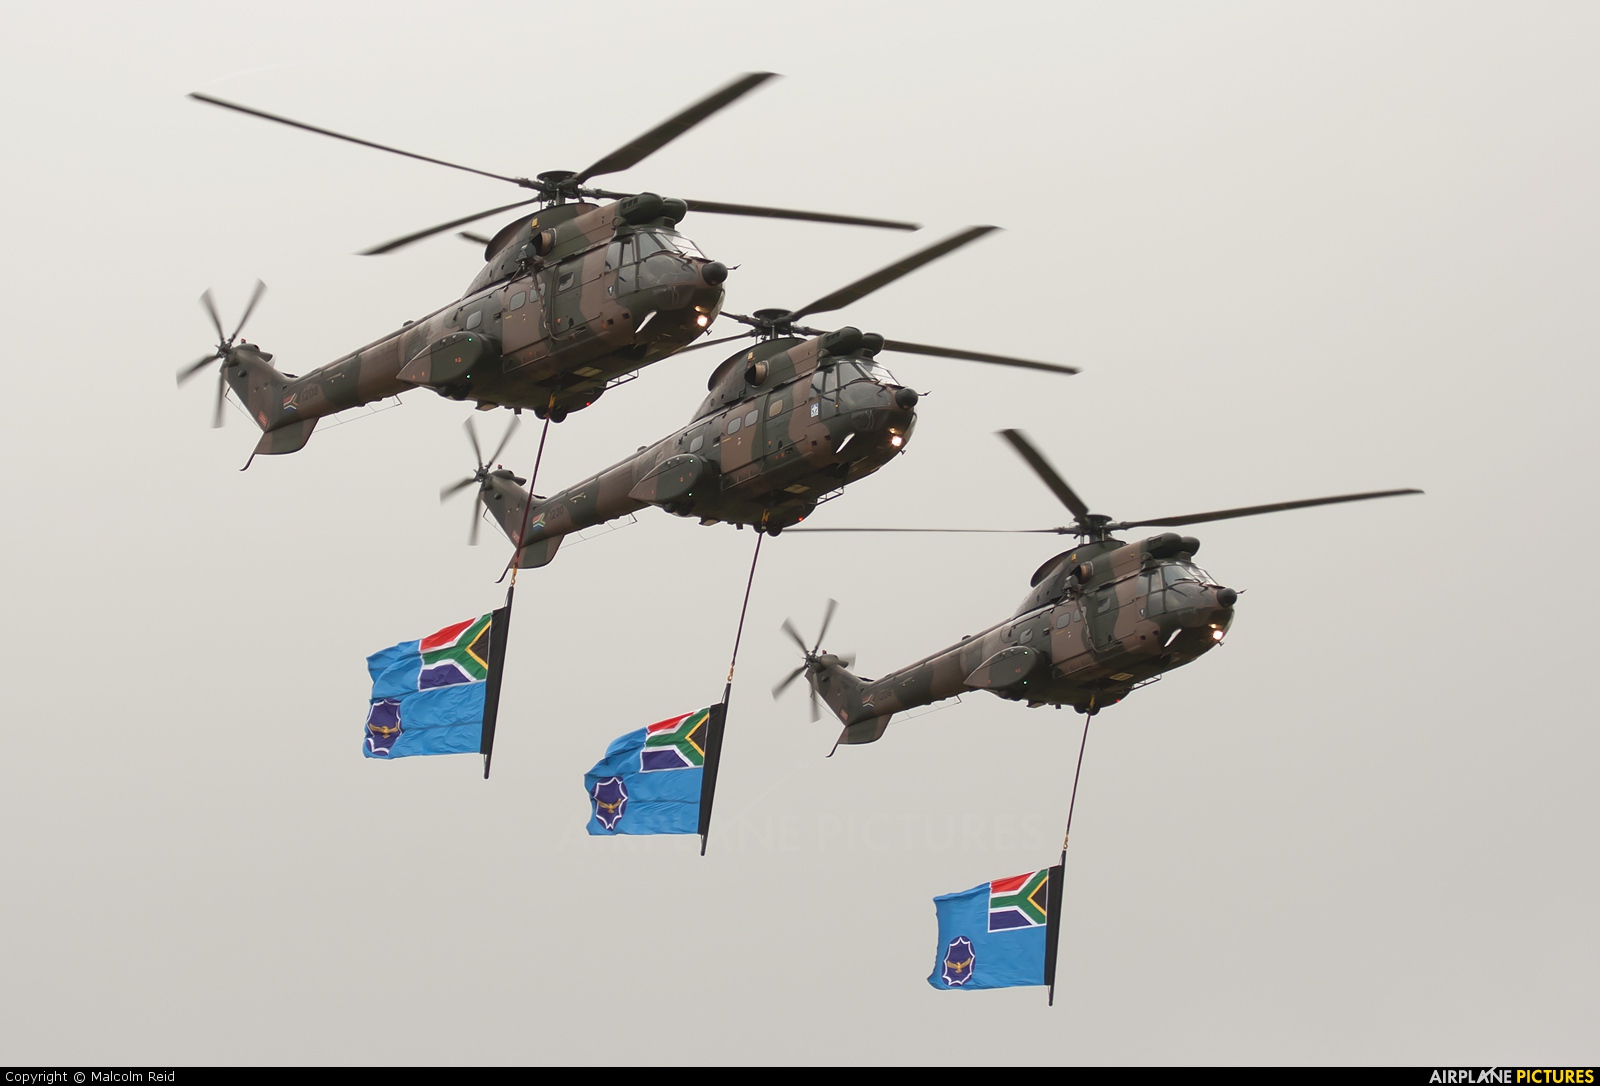 South Africa - Air Force 1208 aircraft at Swartkops